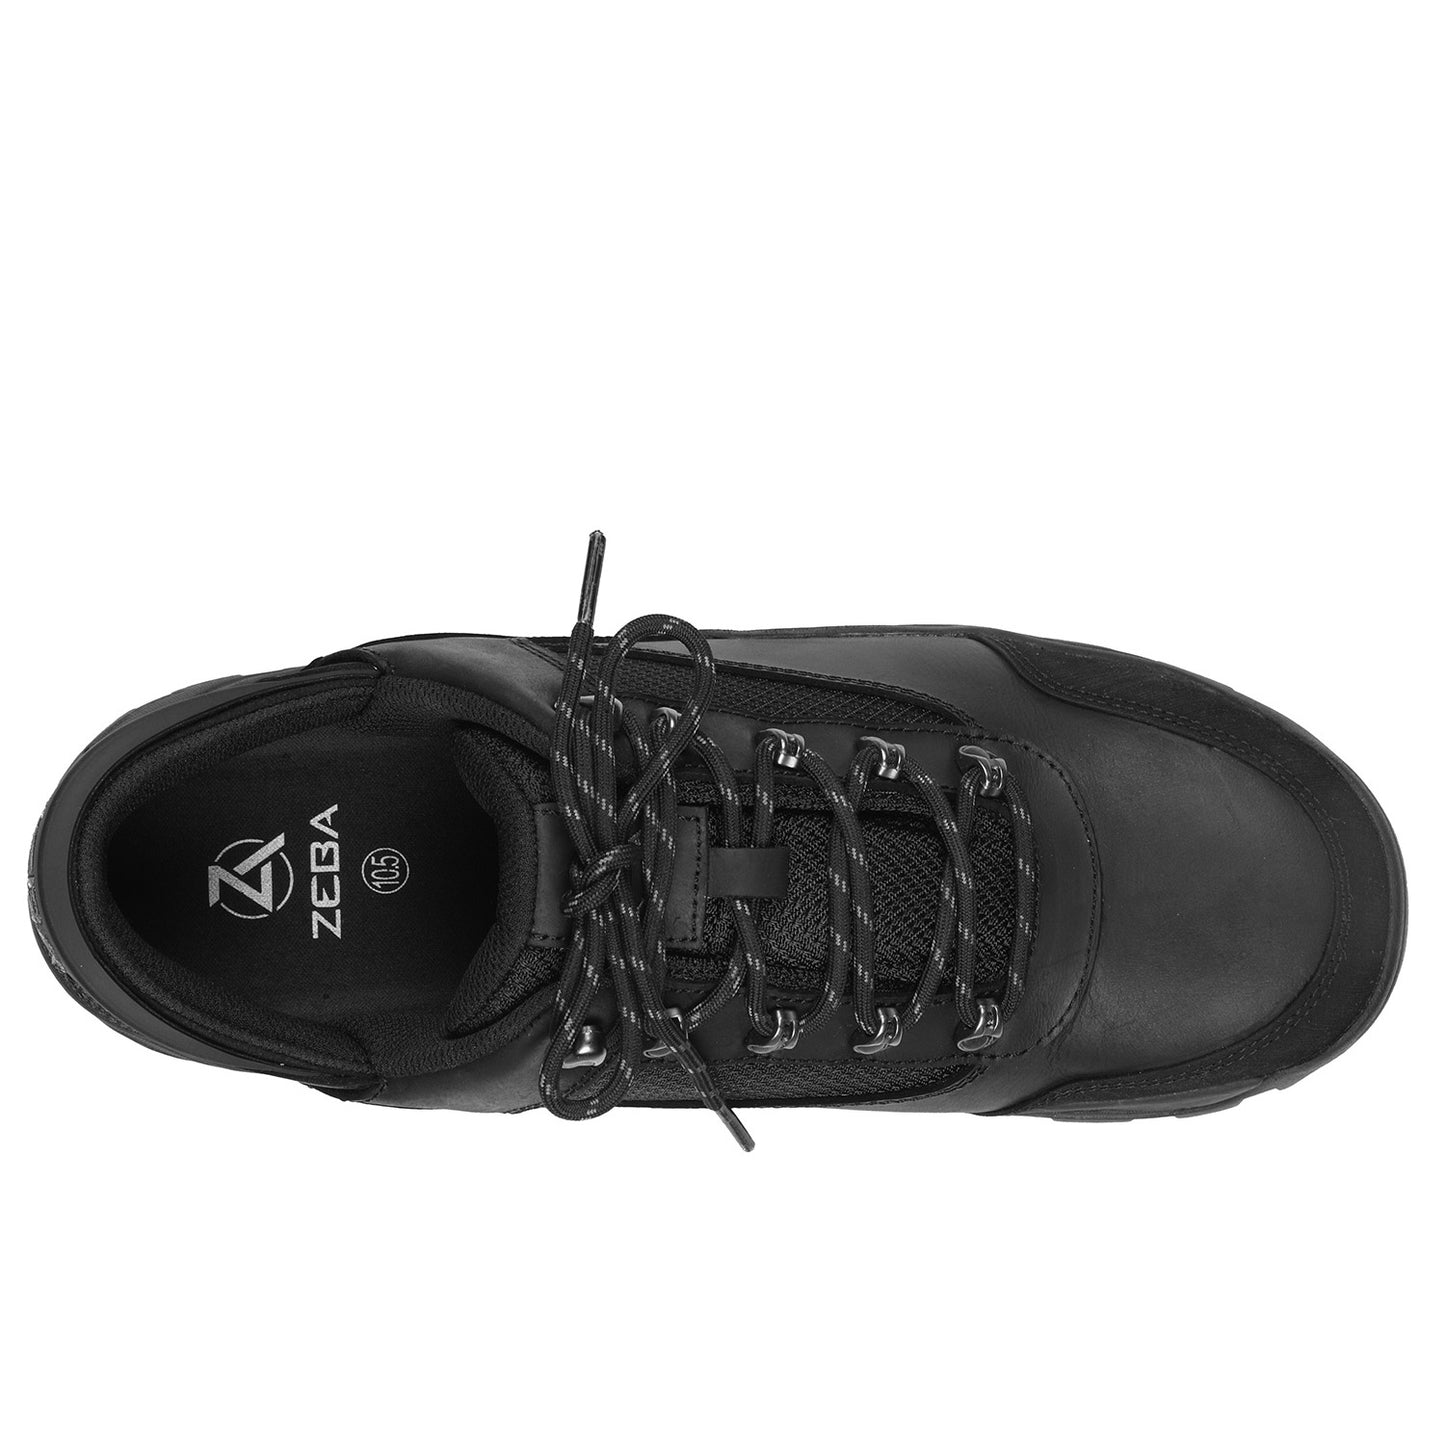 Industrial Black Genuine Leather Steel Toe Work Shoes (Sizes 7-16)